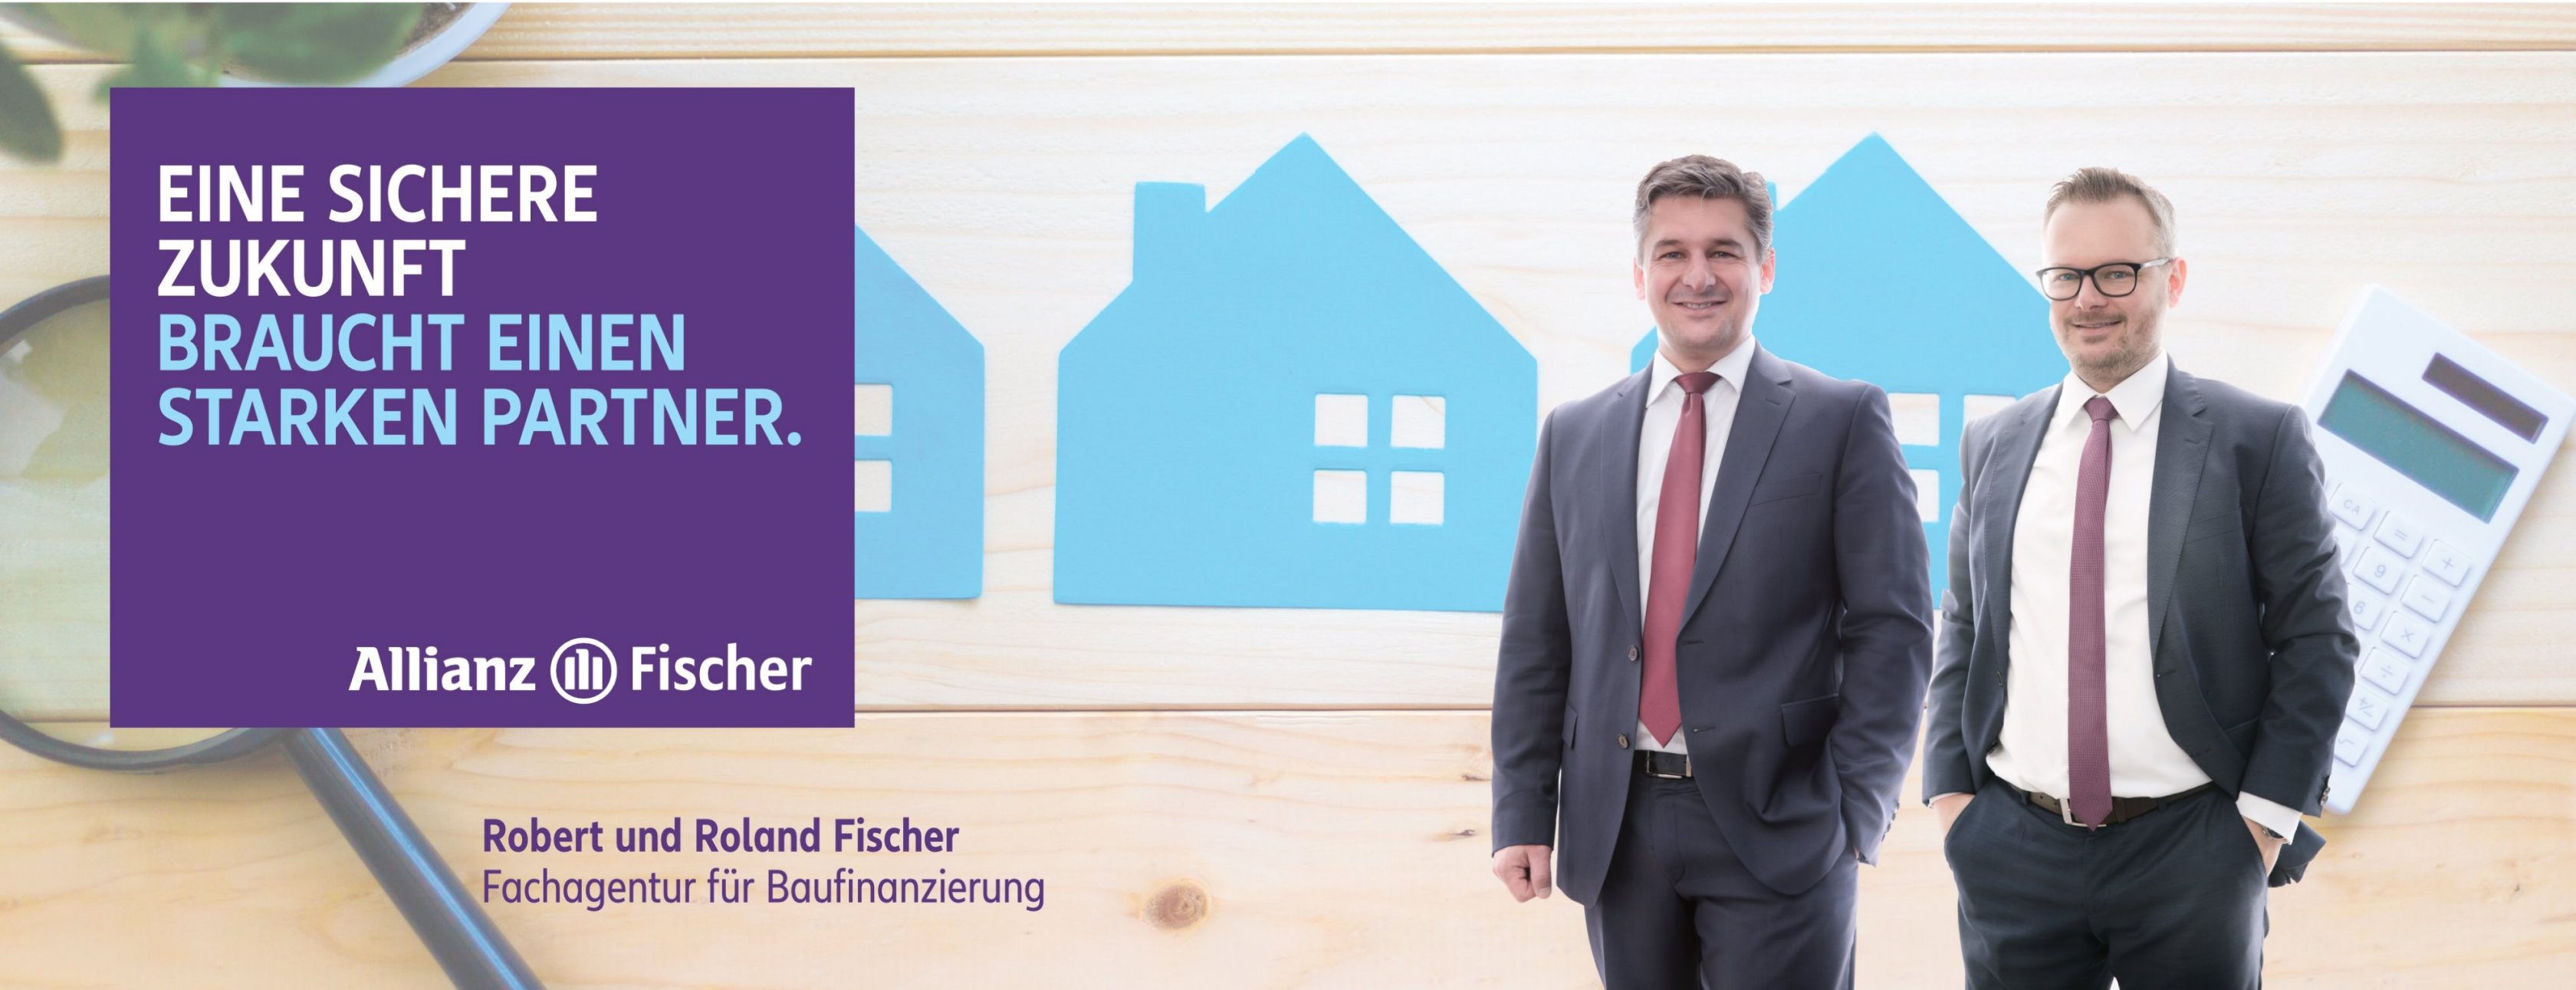 Allianz Versicherung Allianz Fischer Robert und Roland Fischer Kaufering - Allianz Fischer - Sichere Zukunft, starker Partner